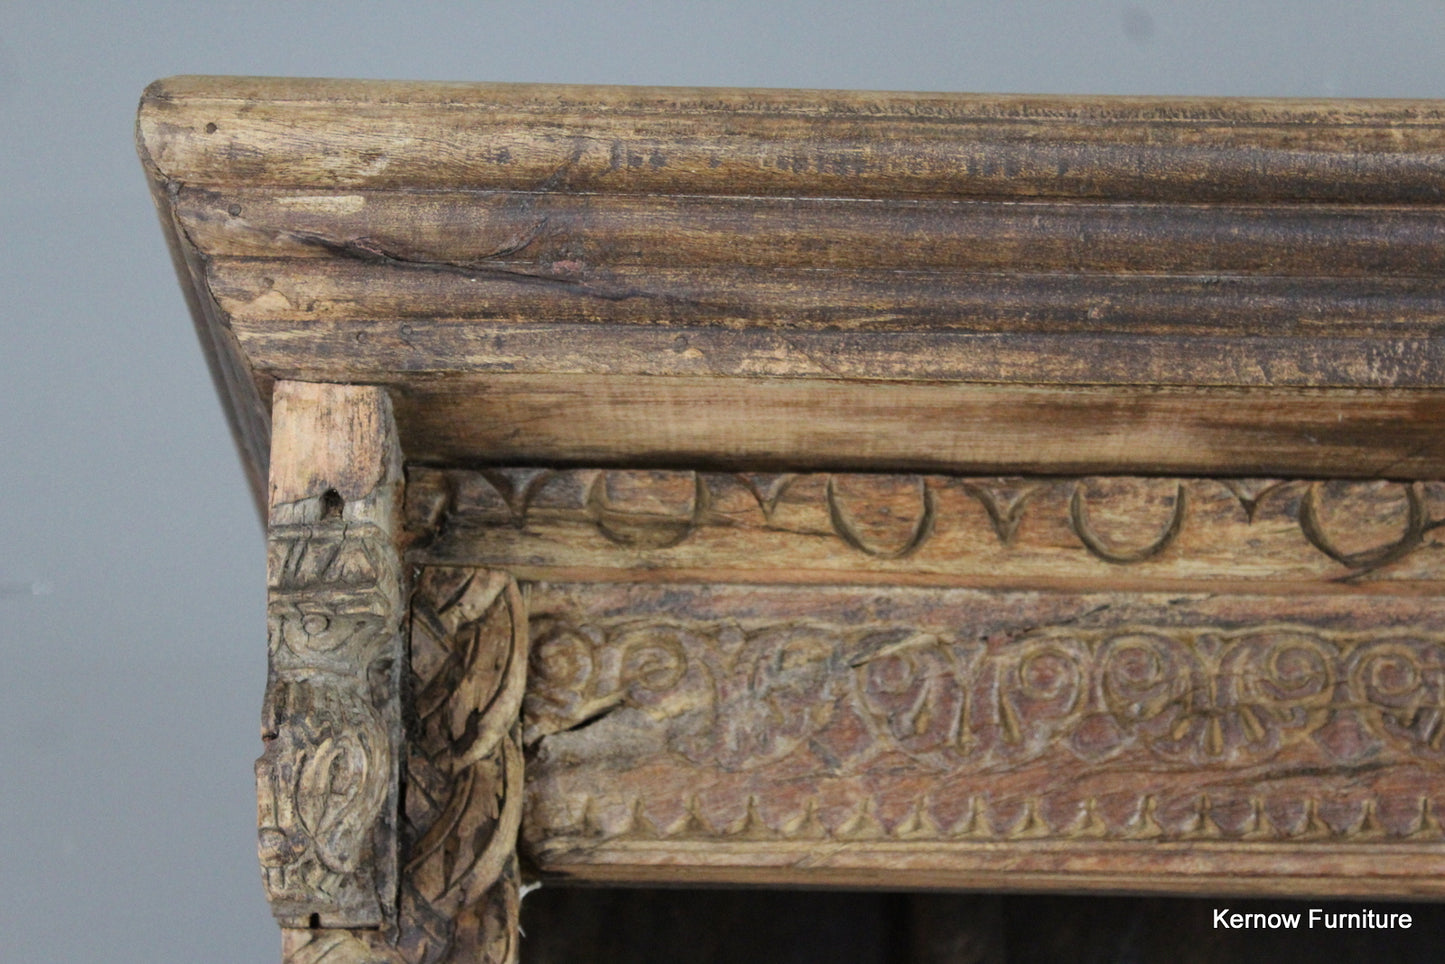 Carved Indian Bookcase - Kernow Furniture